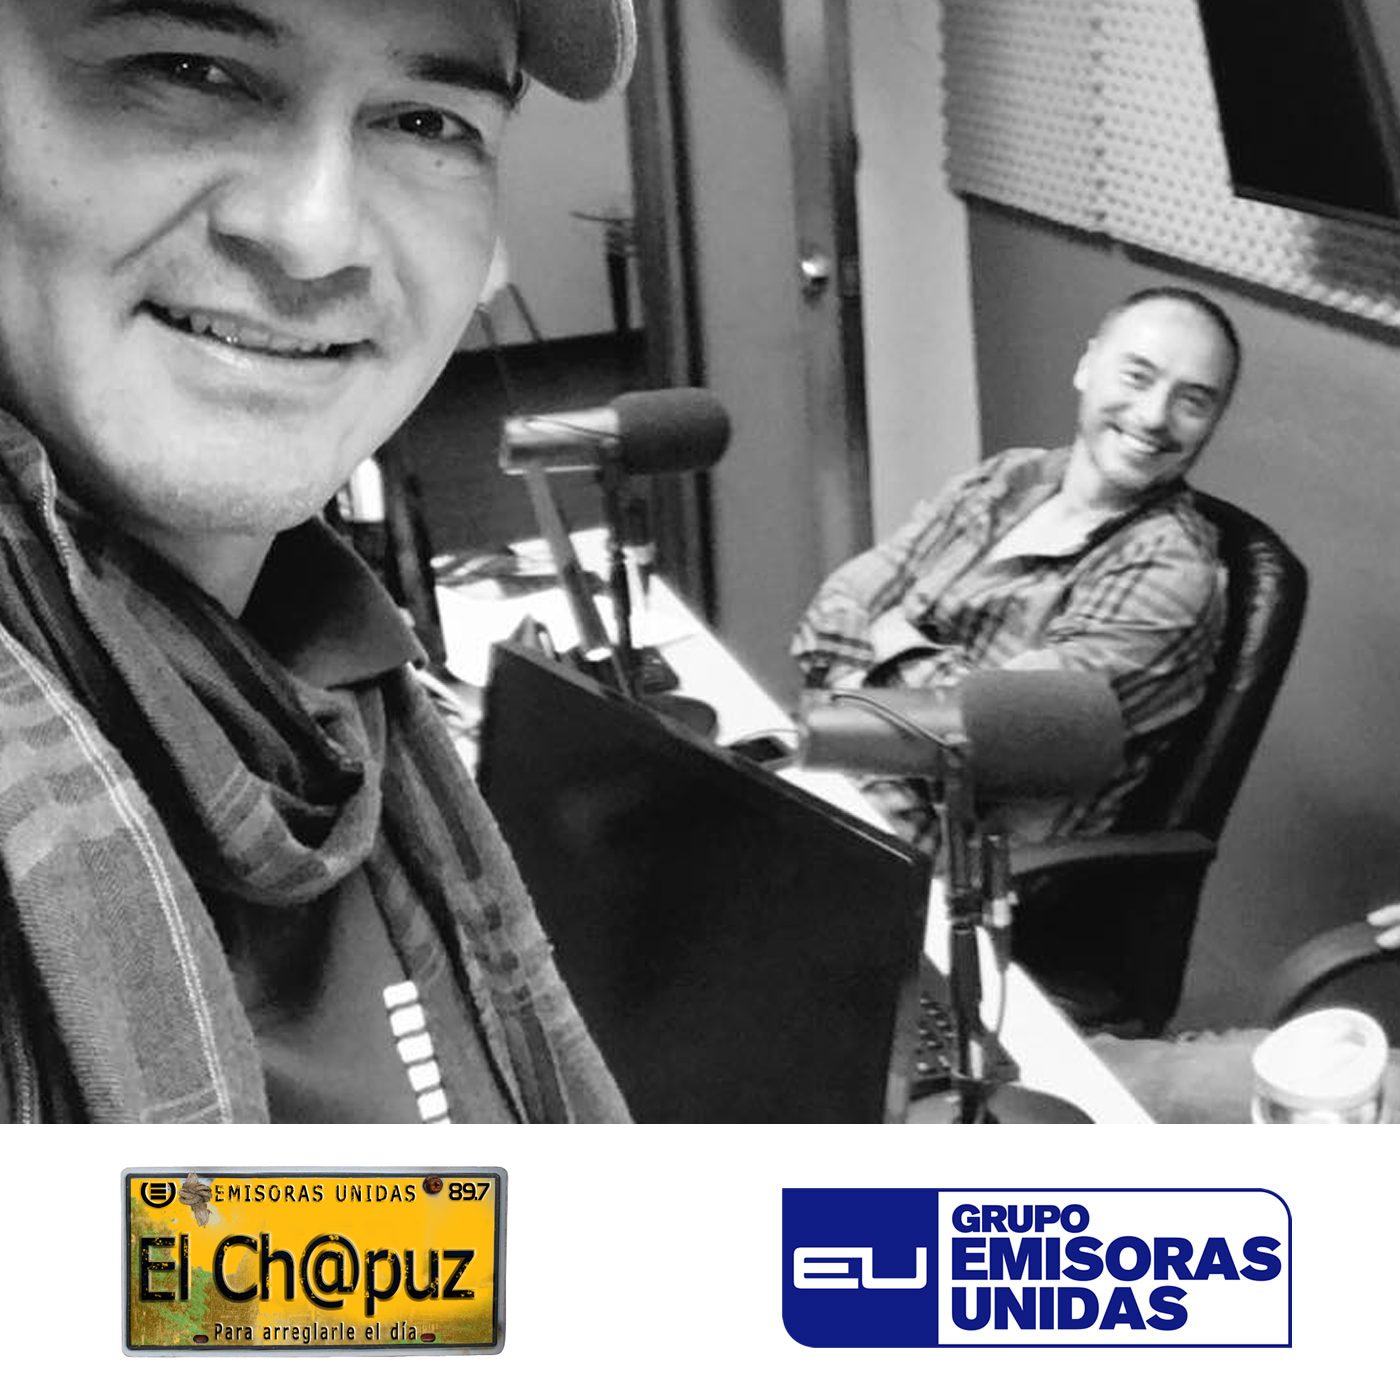 EC39 - El Chapuz - Emisoras unidas - #AvisoImportante